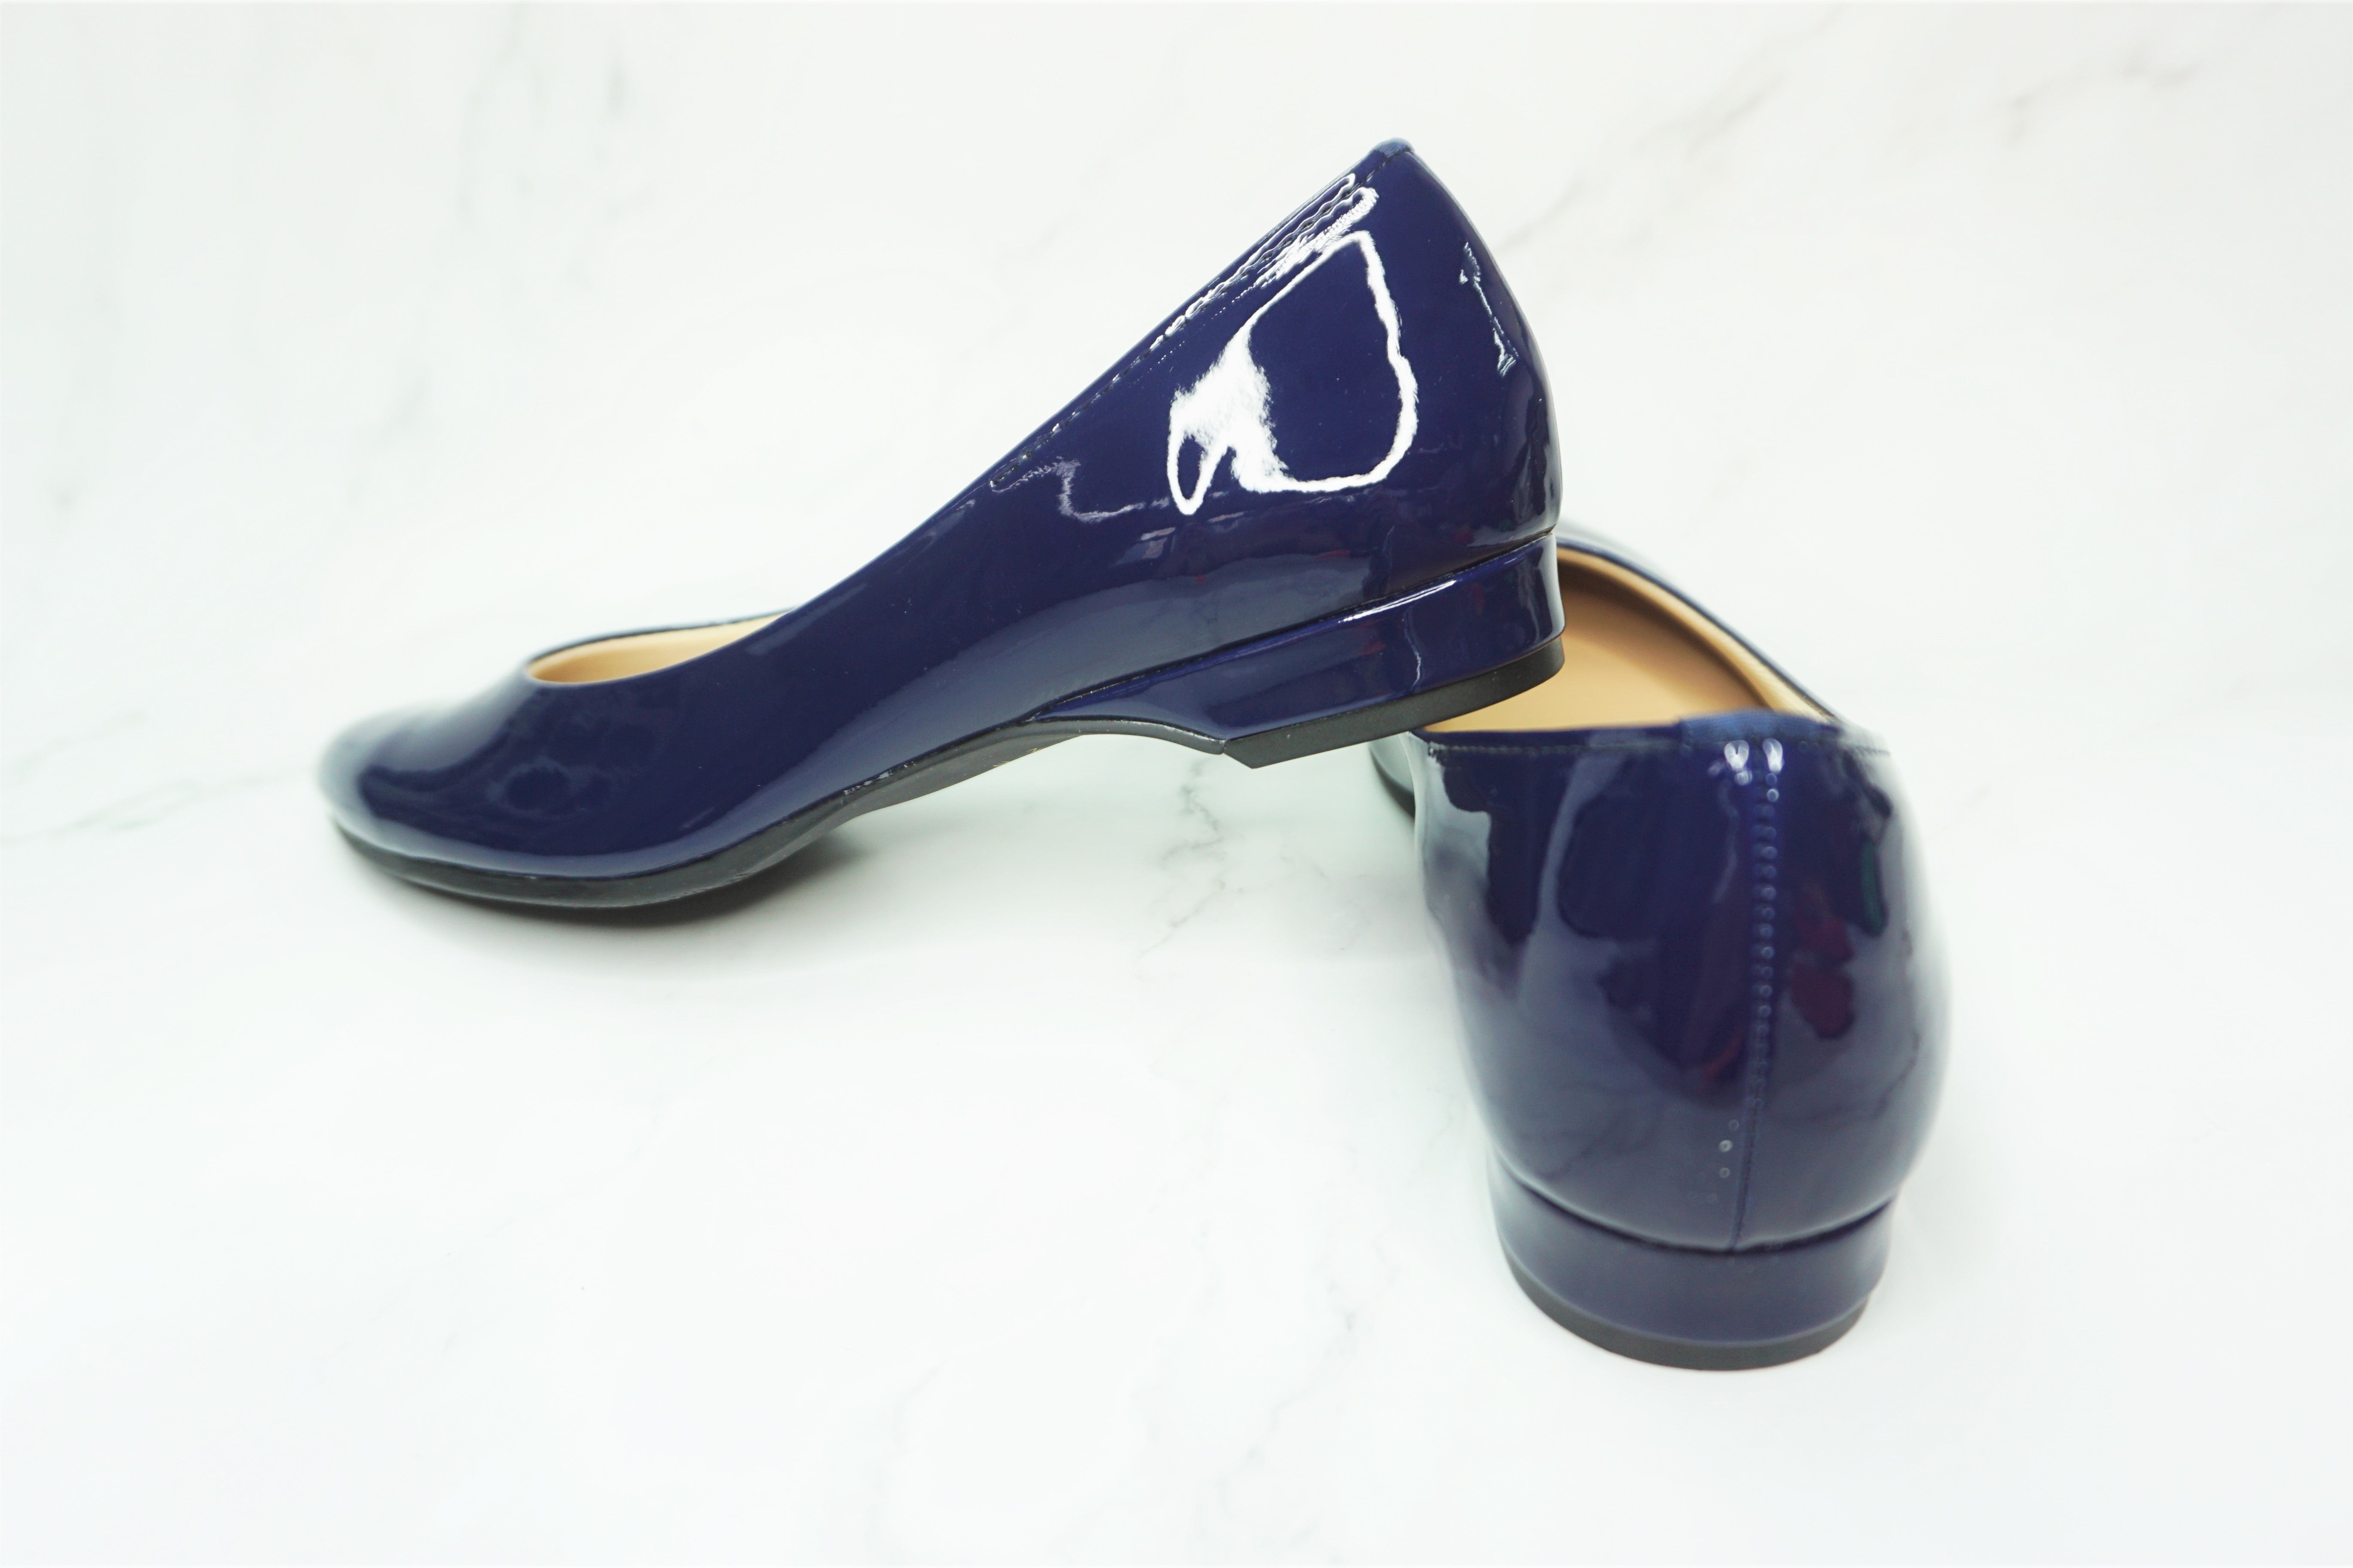 Japan Classic Heels-FIRST CONTACT-NU-JP/TW Size-1: 230-偉豐鞋 WELL SHOE HK-Well Shoe-偉豐鞋-偉豐網-荃灣鞋店-Functional shoes-Hong Kong Tsuen Wan Shoe Store-Tai Wan Shoe-Japan Shoe-高品質功能鞋-台灣進口鞋-日本進口鞋-High-quality shoes-鞋類配件-荃灣進口鞋-香港鞋店-優質鞋類產品-水靴-帆布鞋-廚師鞋-香港鞋品牌-Hong Kong Shoes brand-長者鞋-Hong Kong Rain Boots-Kitchen shoes-Cruthes-Slipper-Well Shoe Hong Kong-Anello-Arriba-休閒鞋-舒適鞋-健康鞋-皮鞋-Healthy shoes-Leather shoes-Hiking shoes